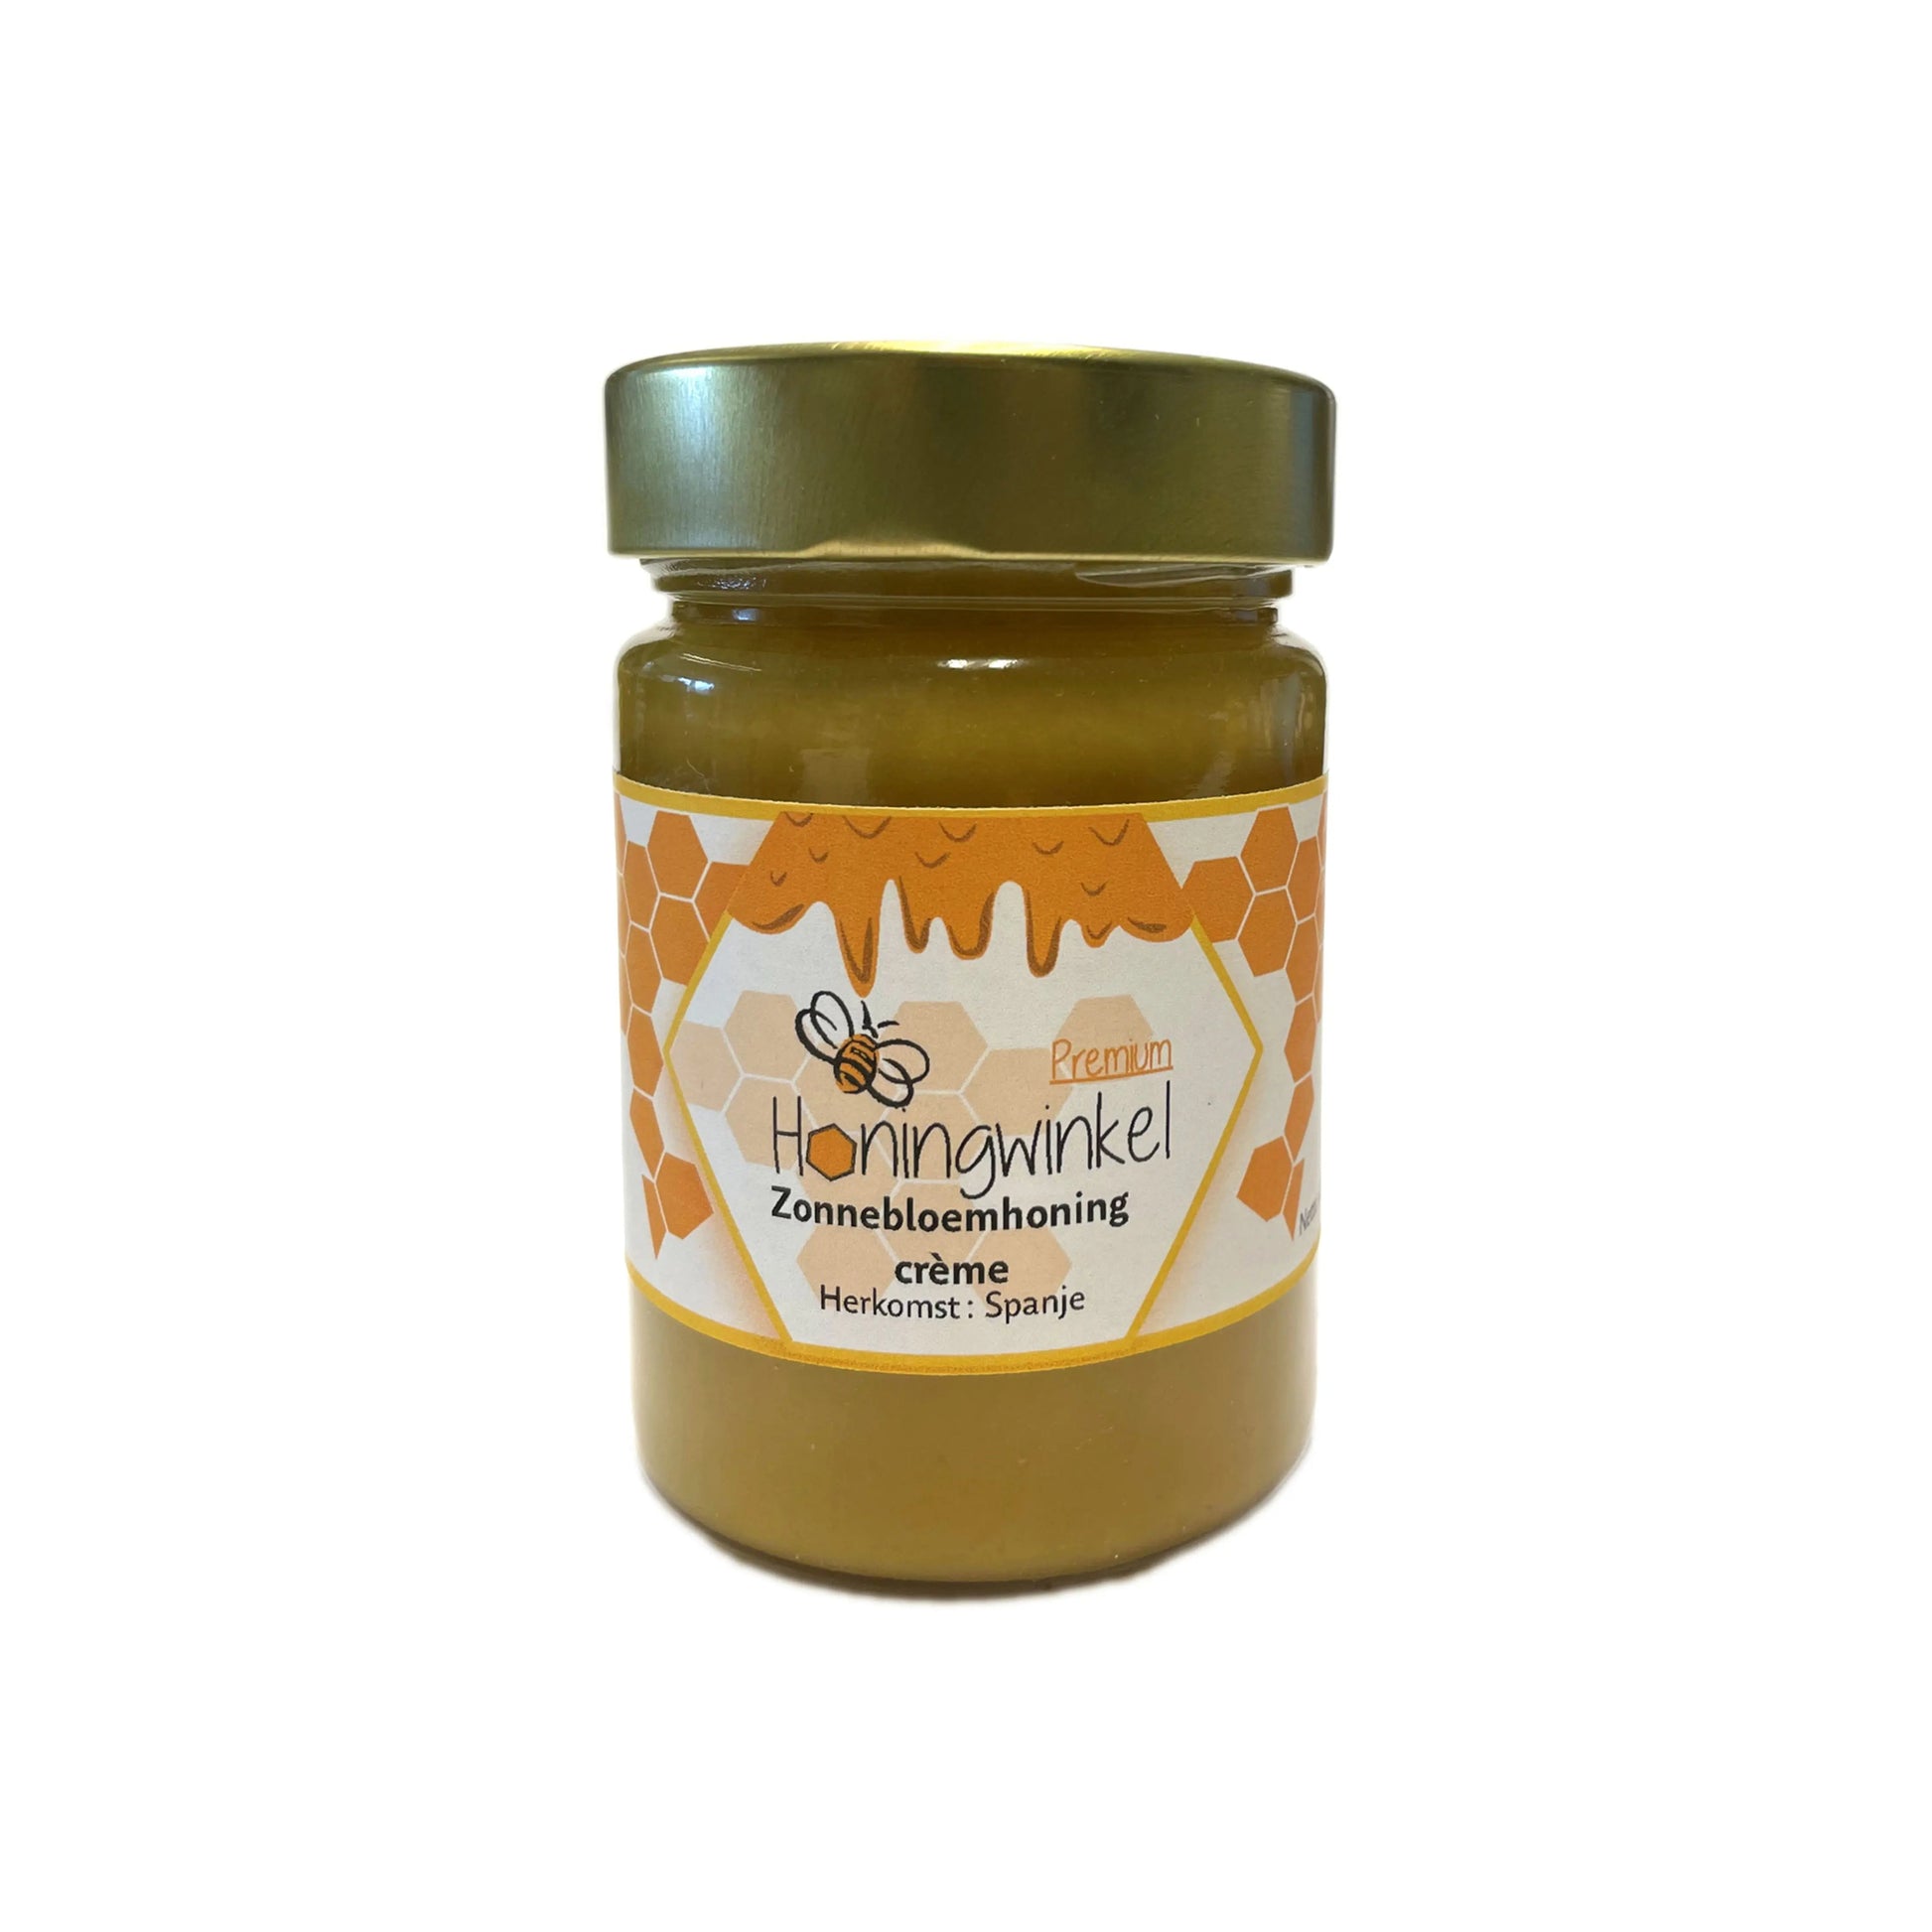 Premium zonnebloemhoning Spanje 450g Honingwinkel (crème) - Honingwinkel